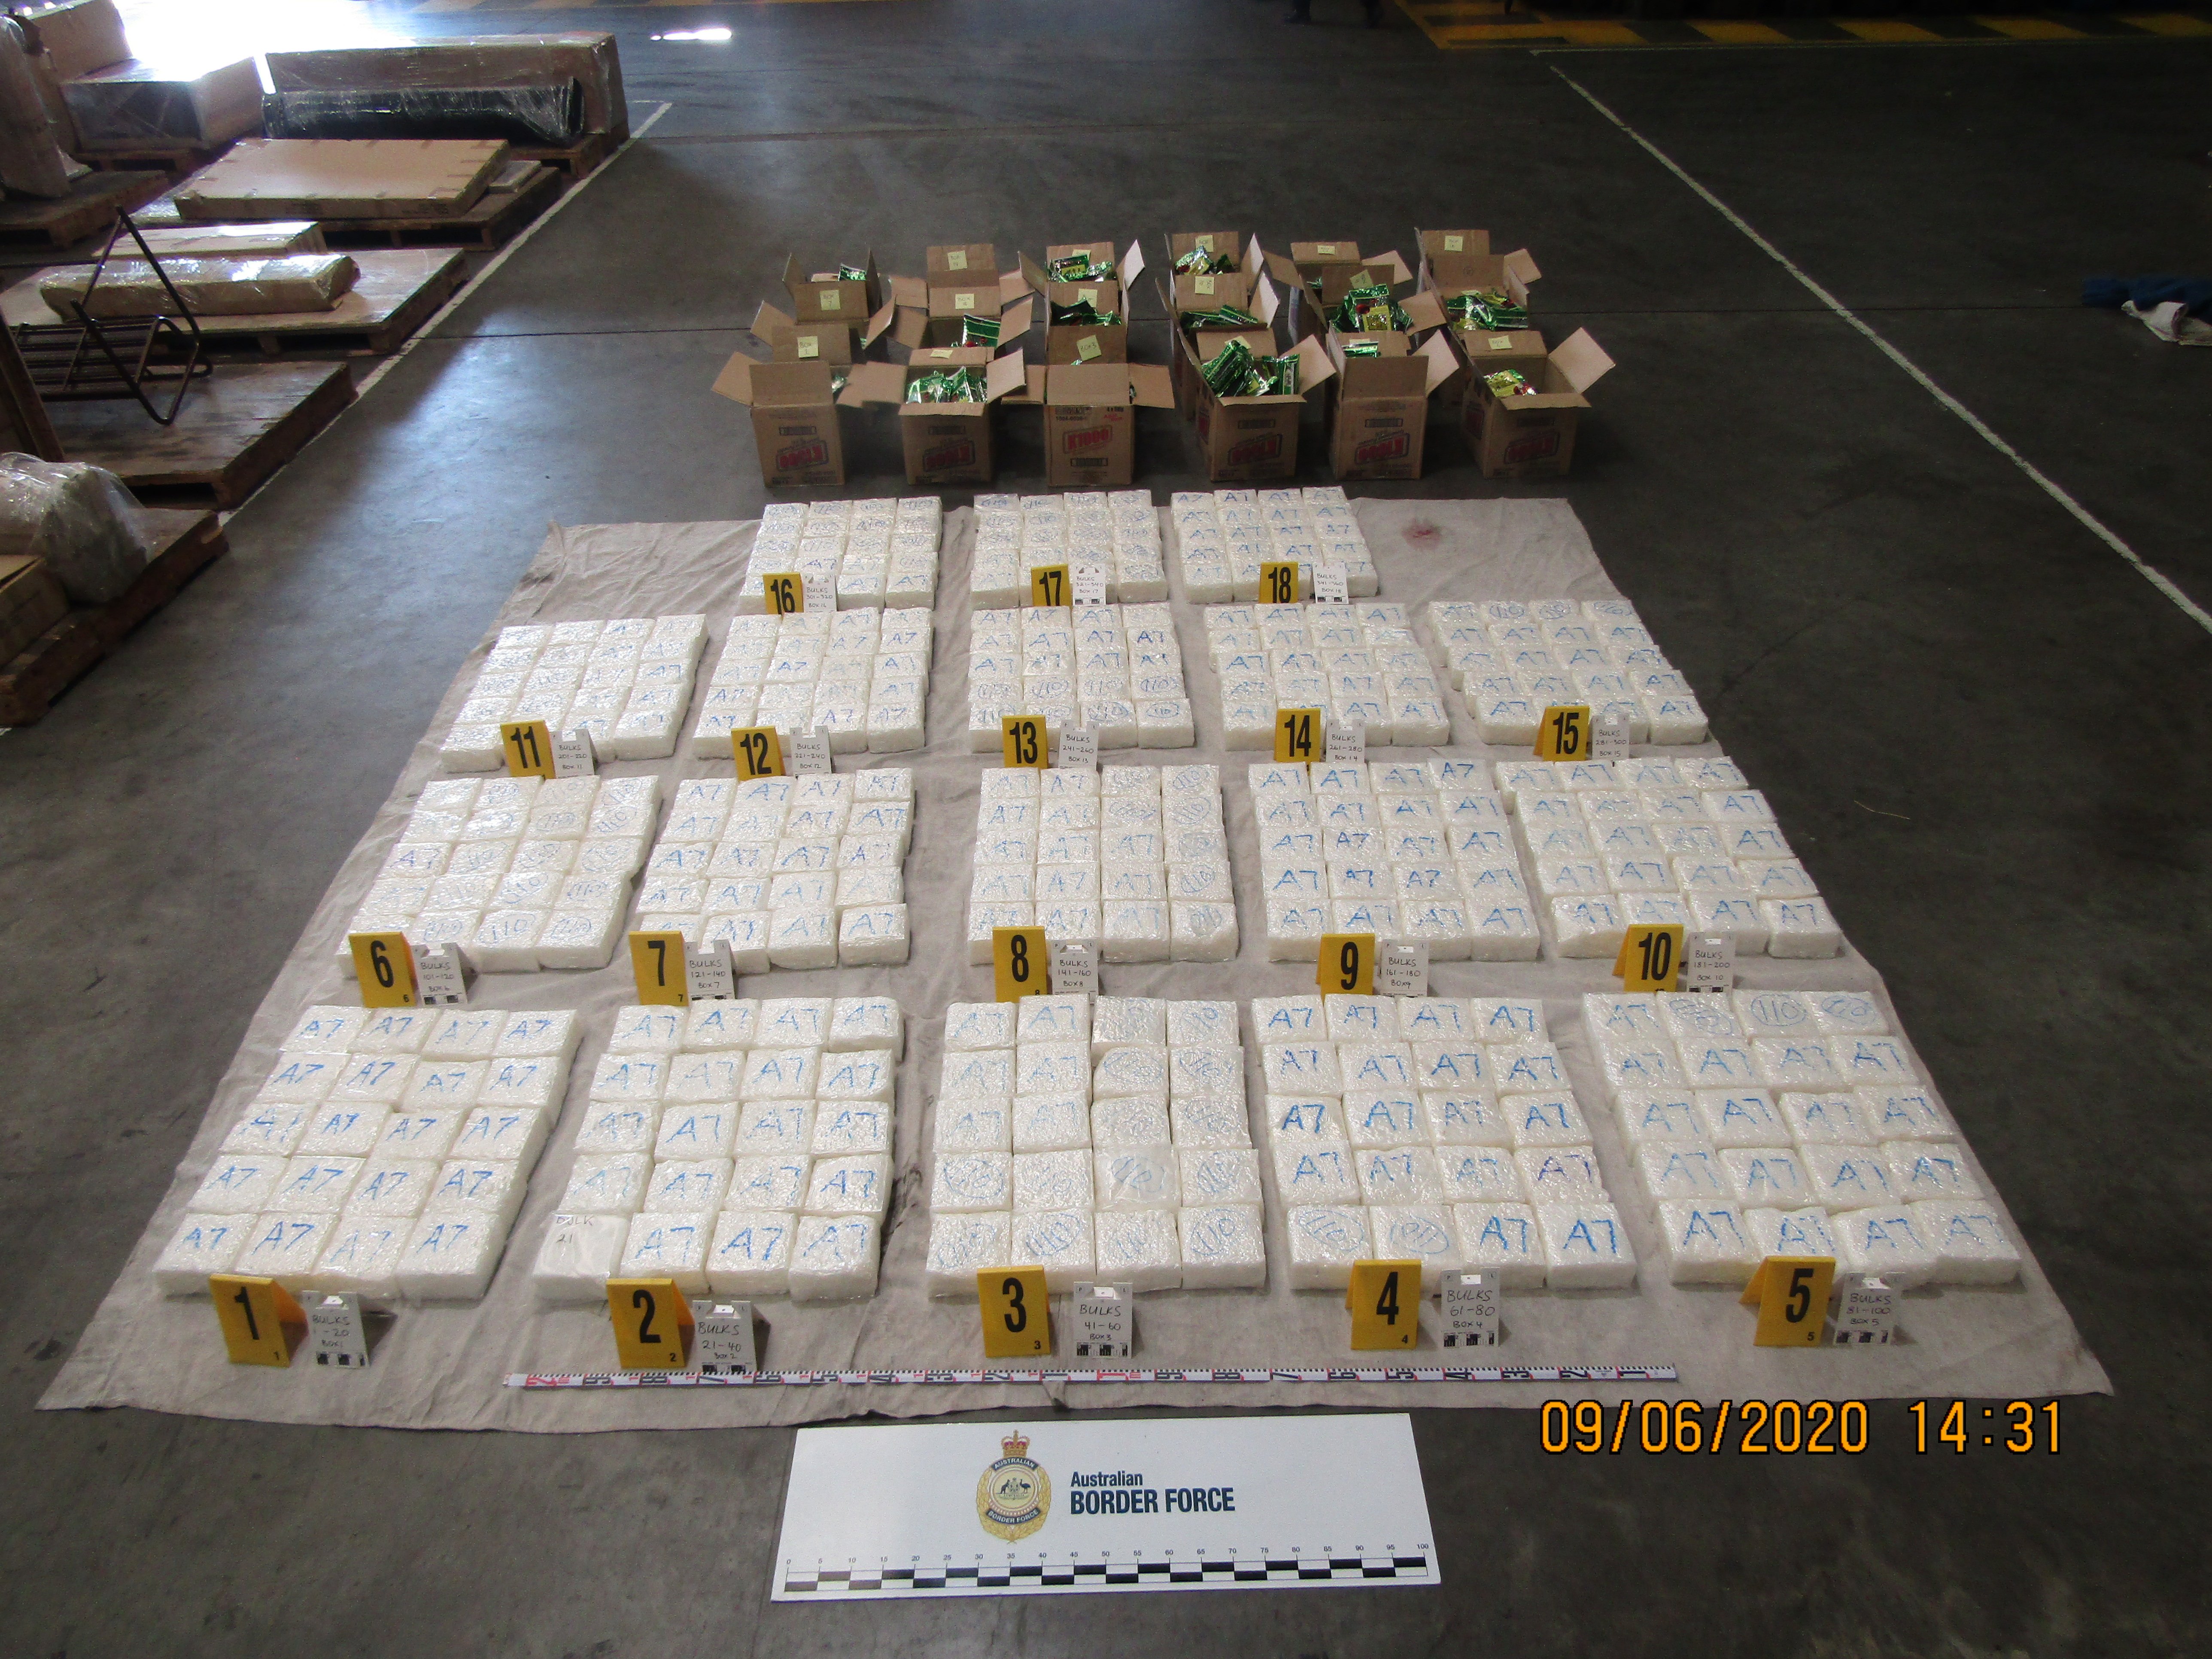 Blocks of meth sized by Australian authorities